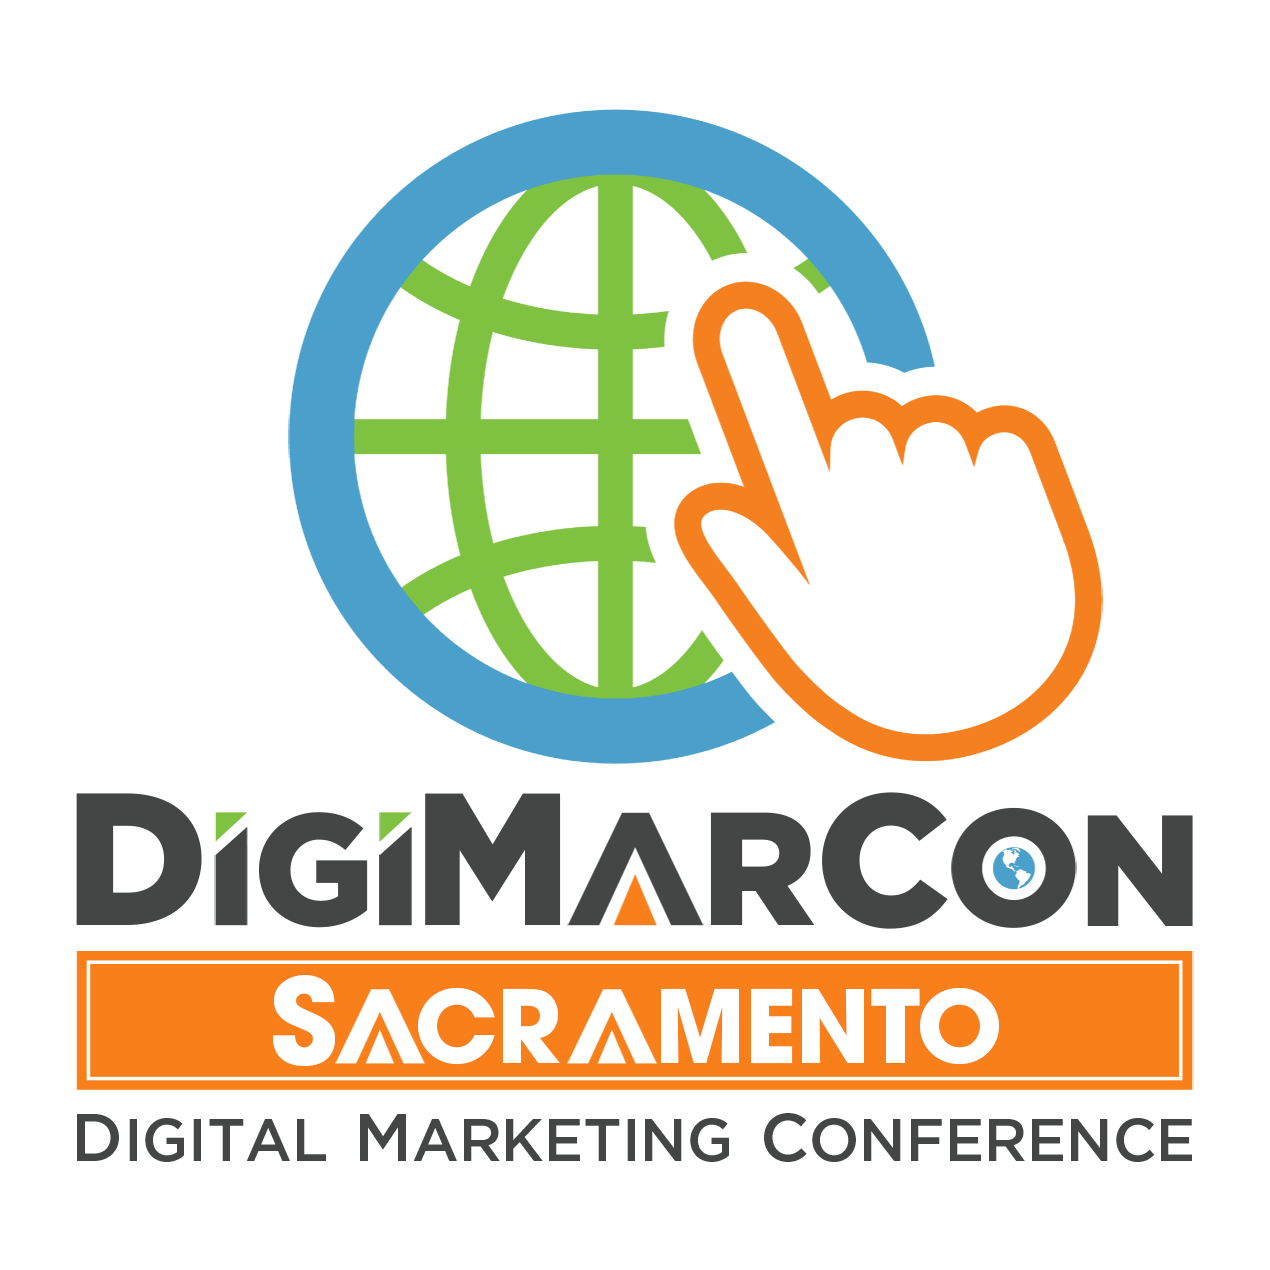 Sacramento Digital Marketing, Media & Advertising Conference